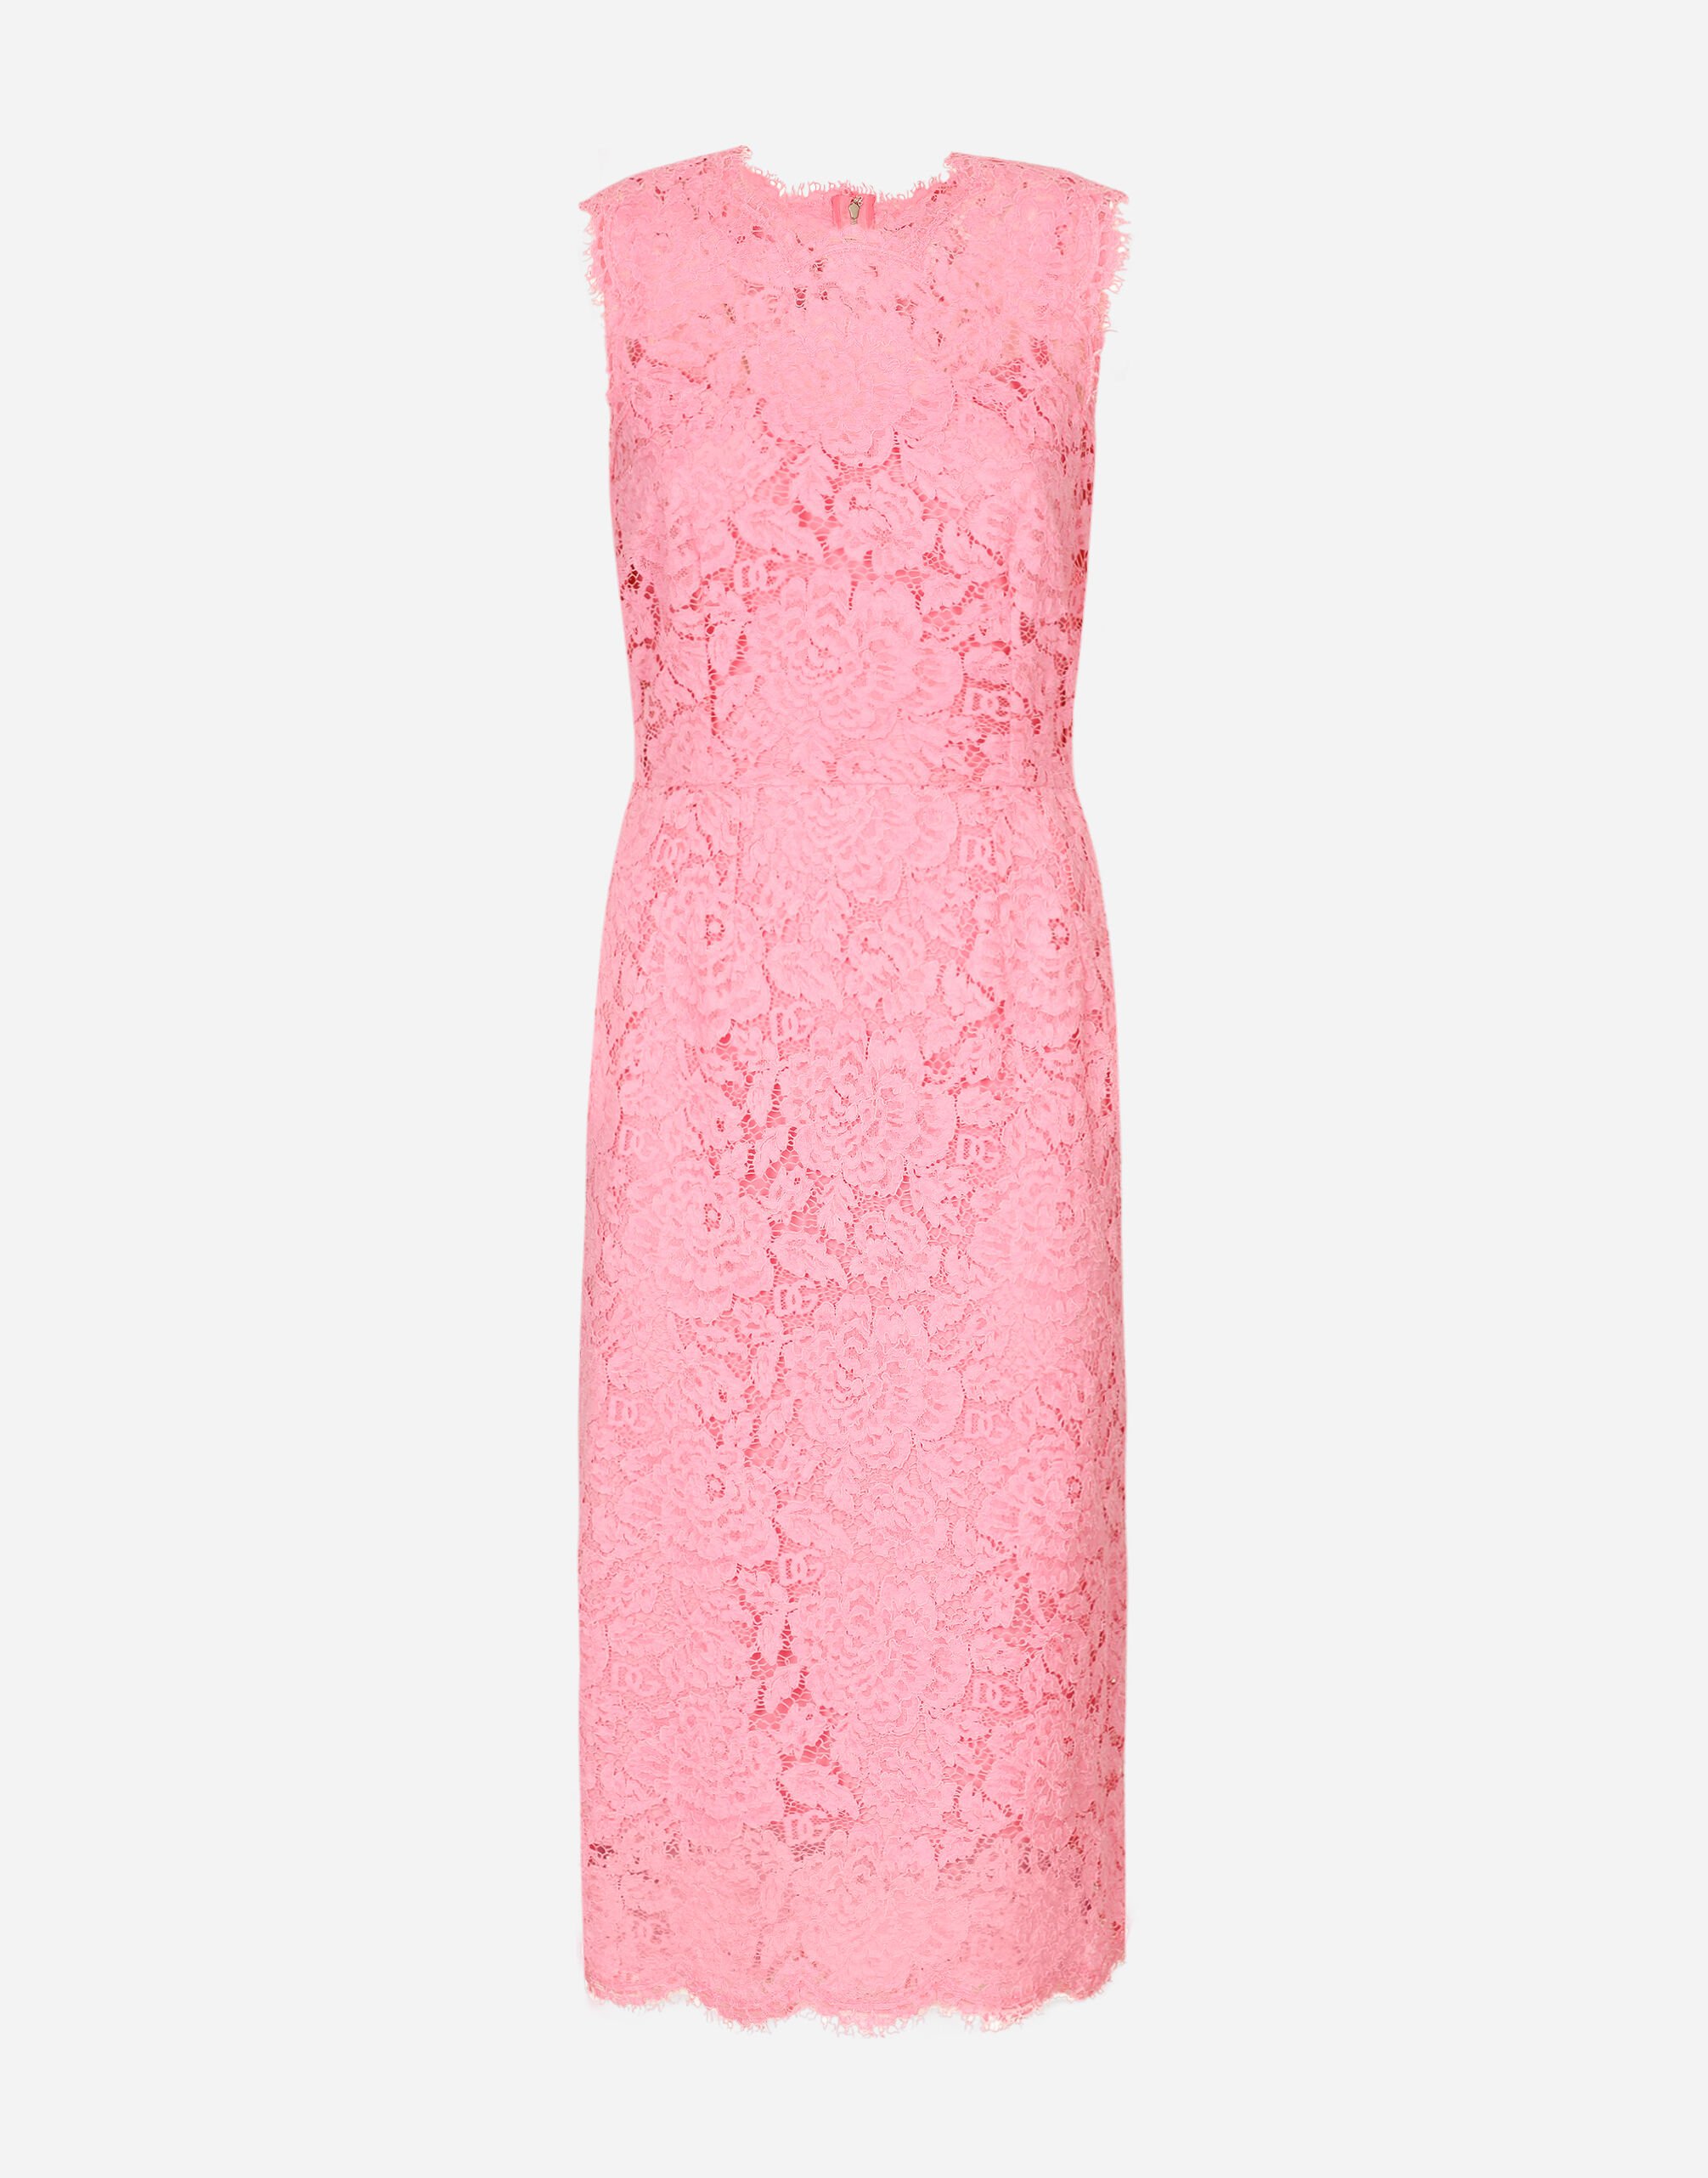 Dolce & Gabbana Branded stretch lace calf-length dress Pink F79DATFMMHN